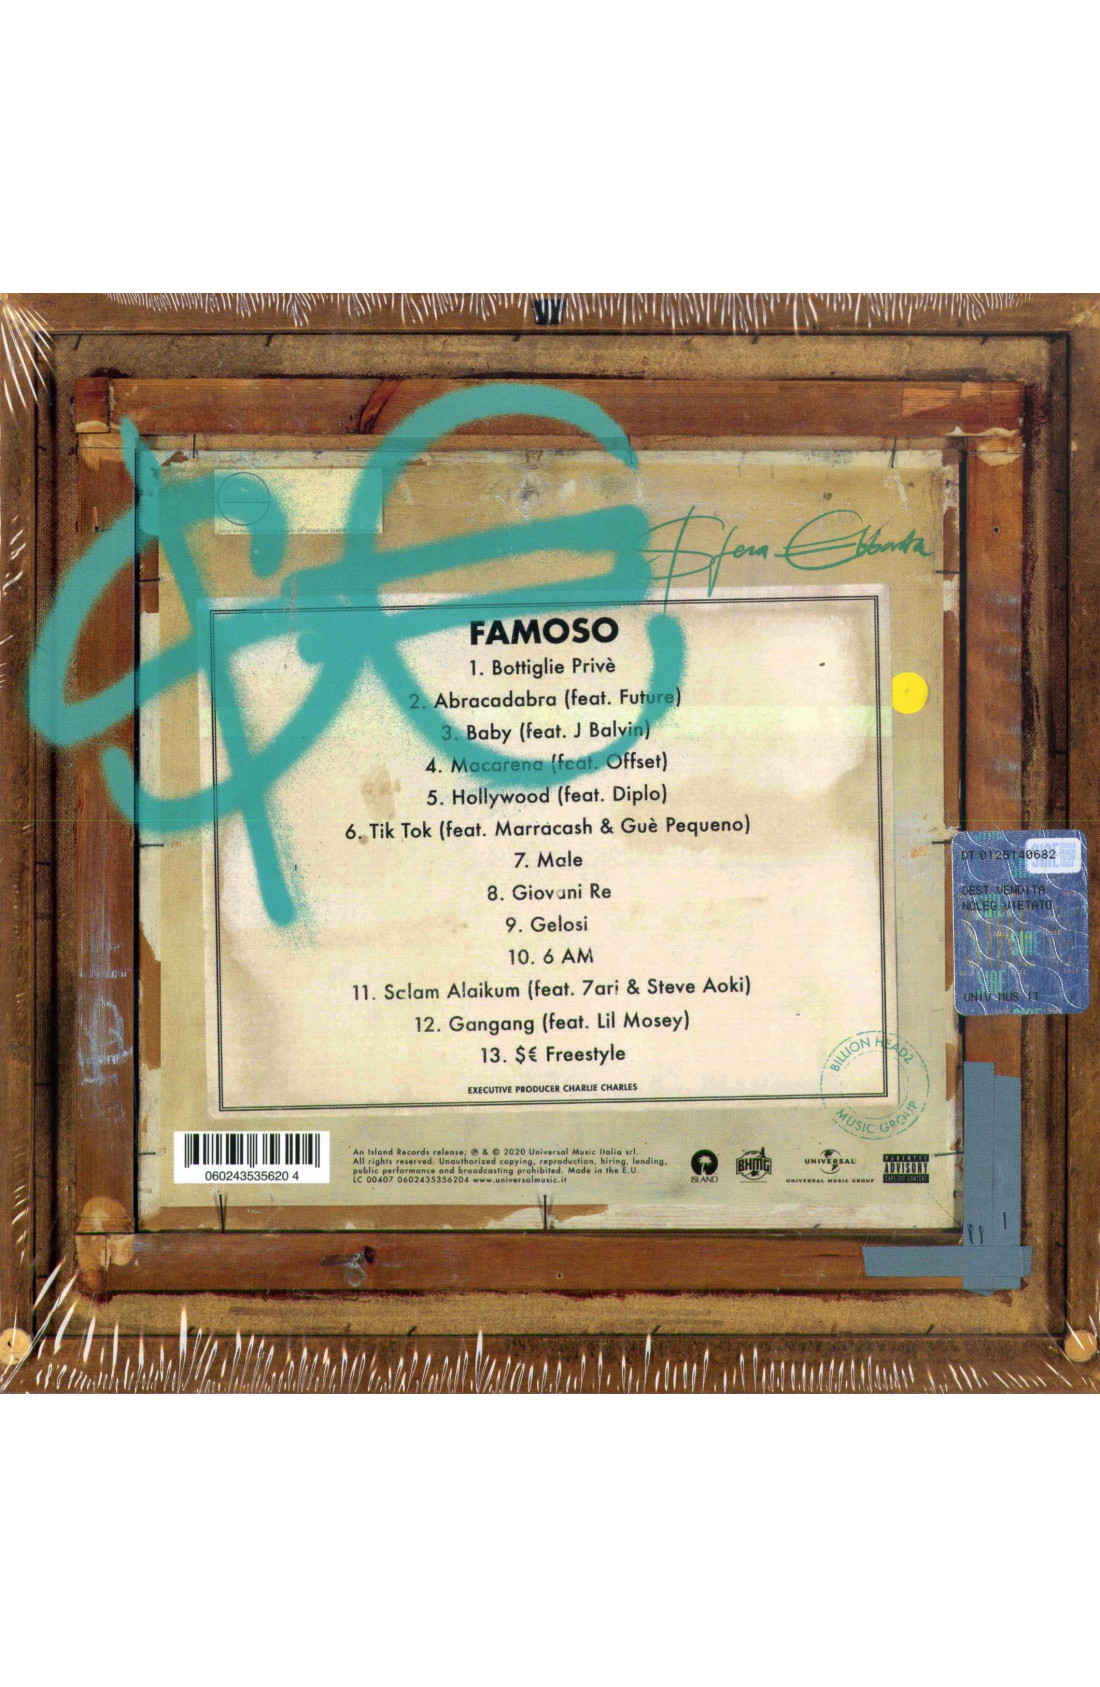 Sfera Ebbasta - Famoso (CD) - Rap Italiano - CD